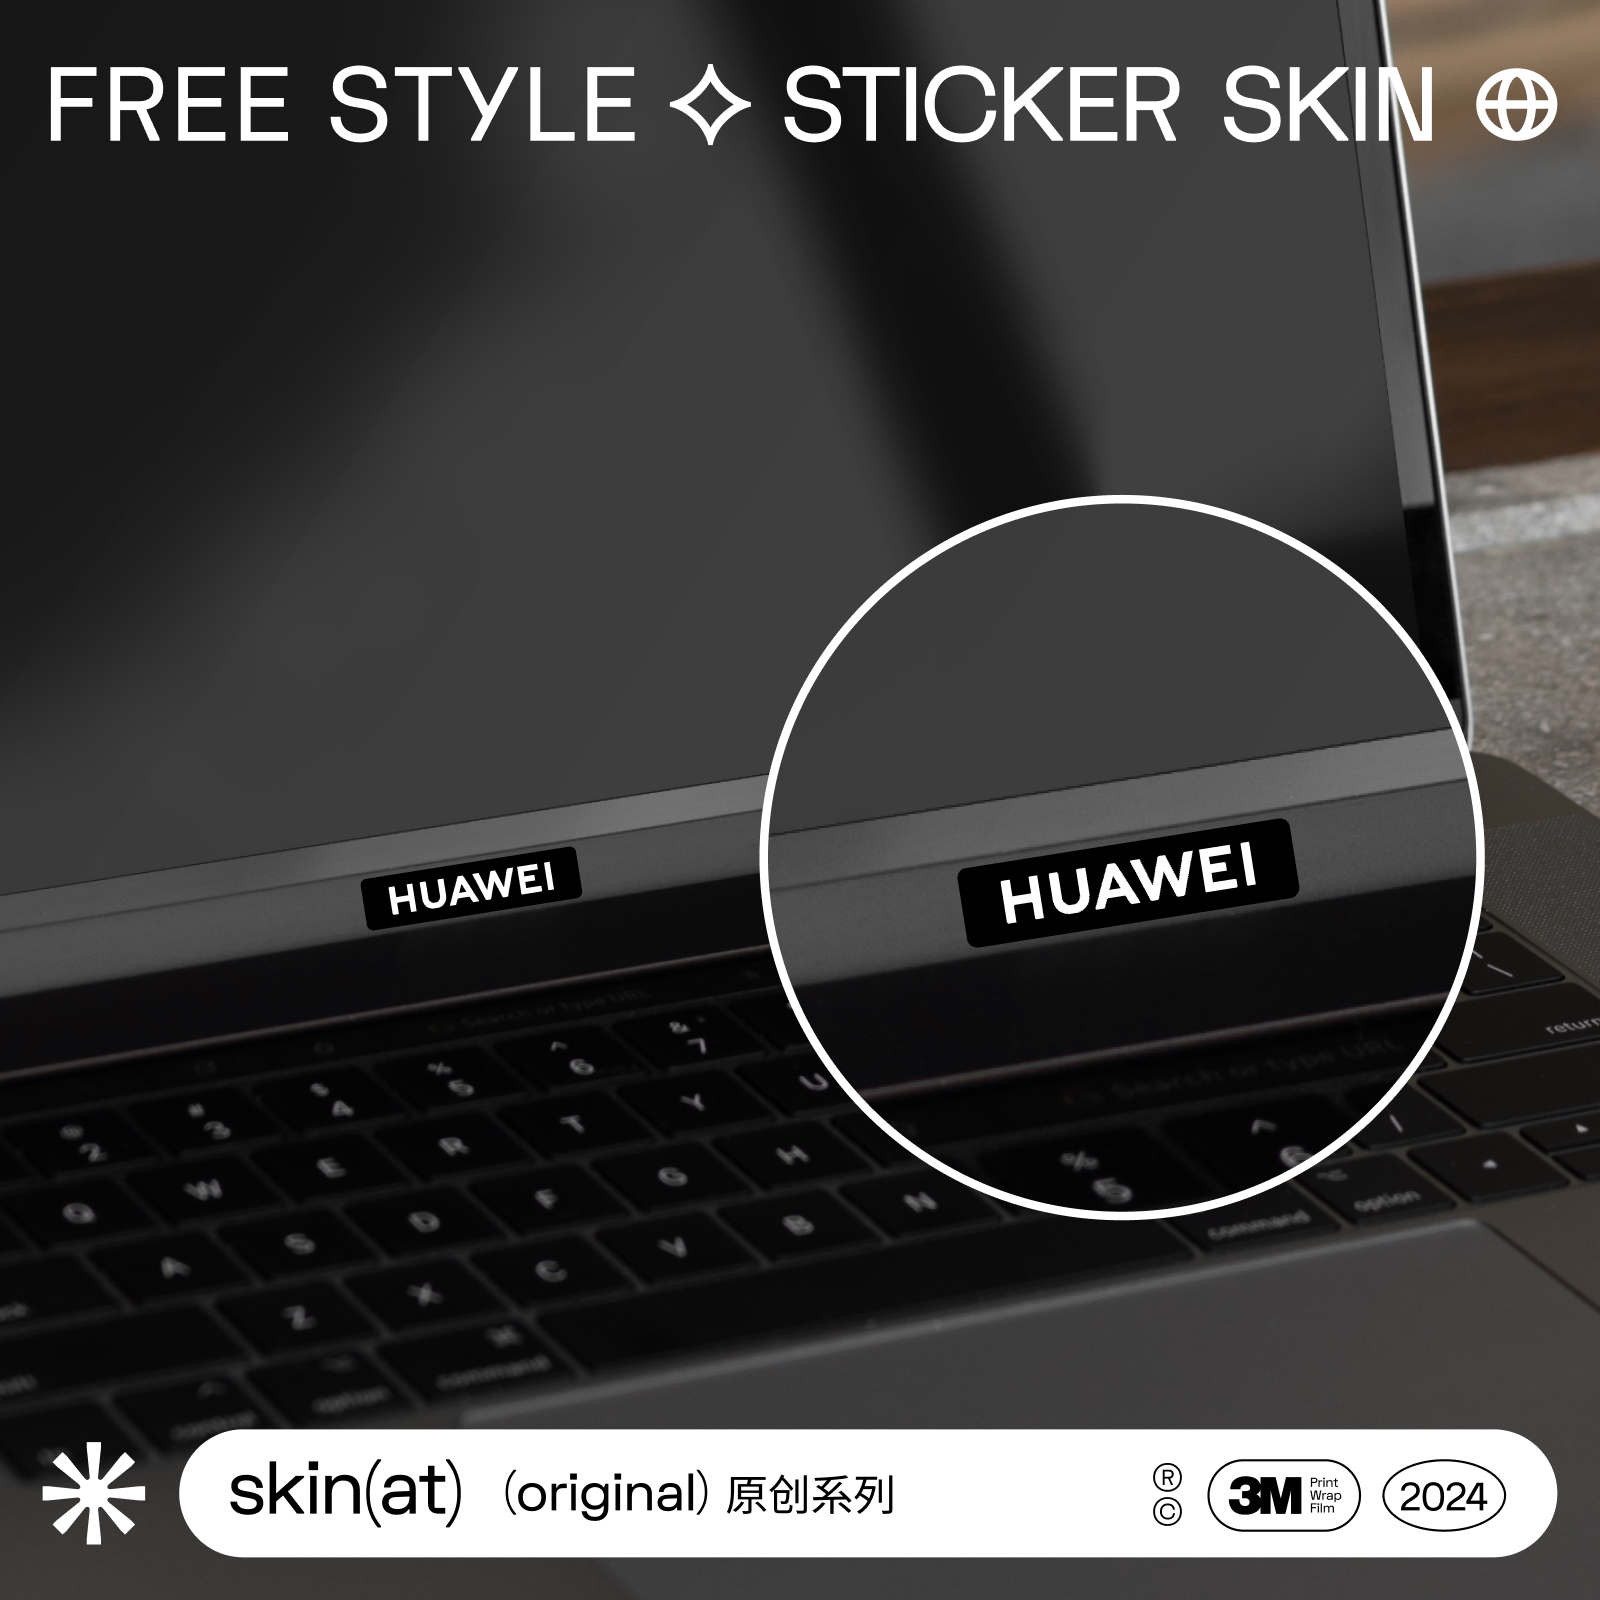 SkinAT适用于Macbook屏幕下伪装贴 手机后盖装HUAWEI笔记本经典菊花图案 电脑爱国华为一线员工 伪装遮瑕logo